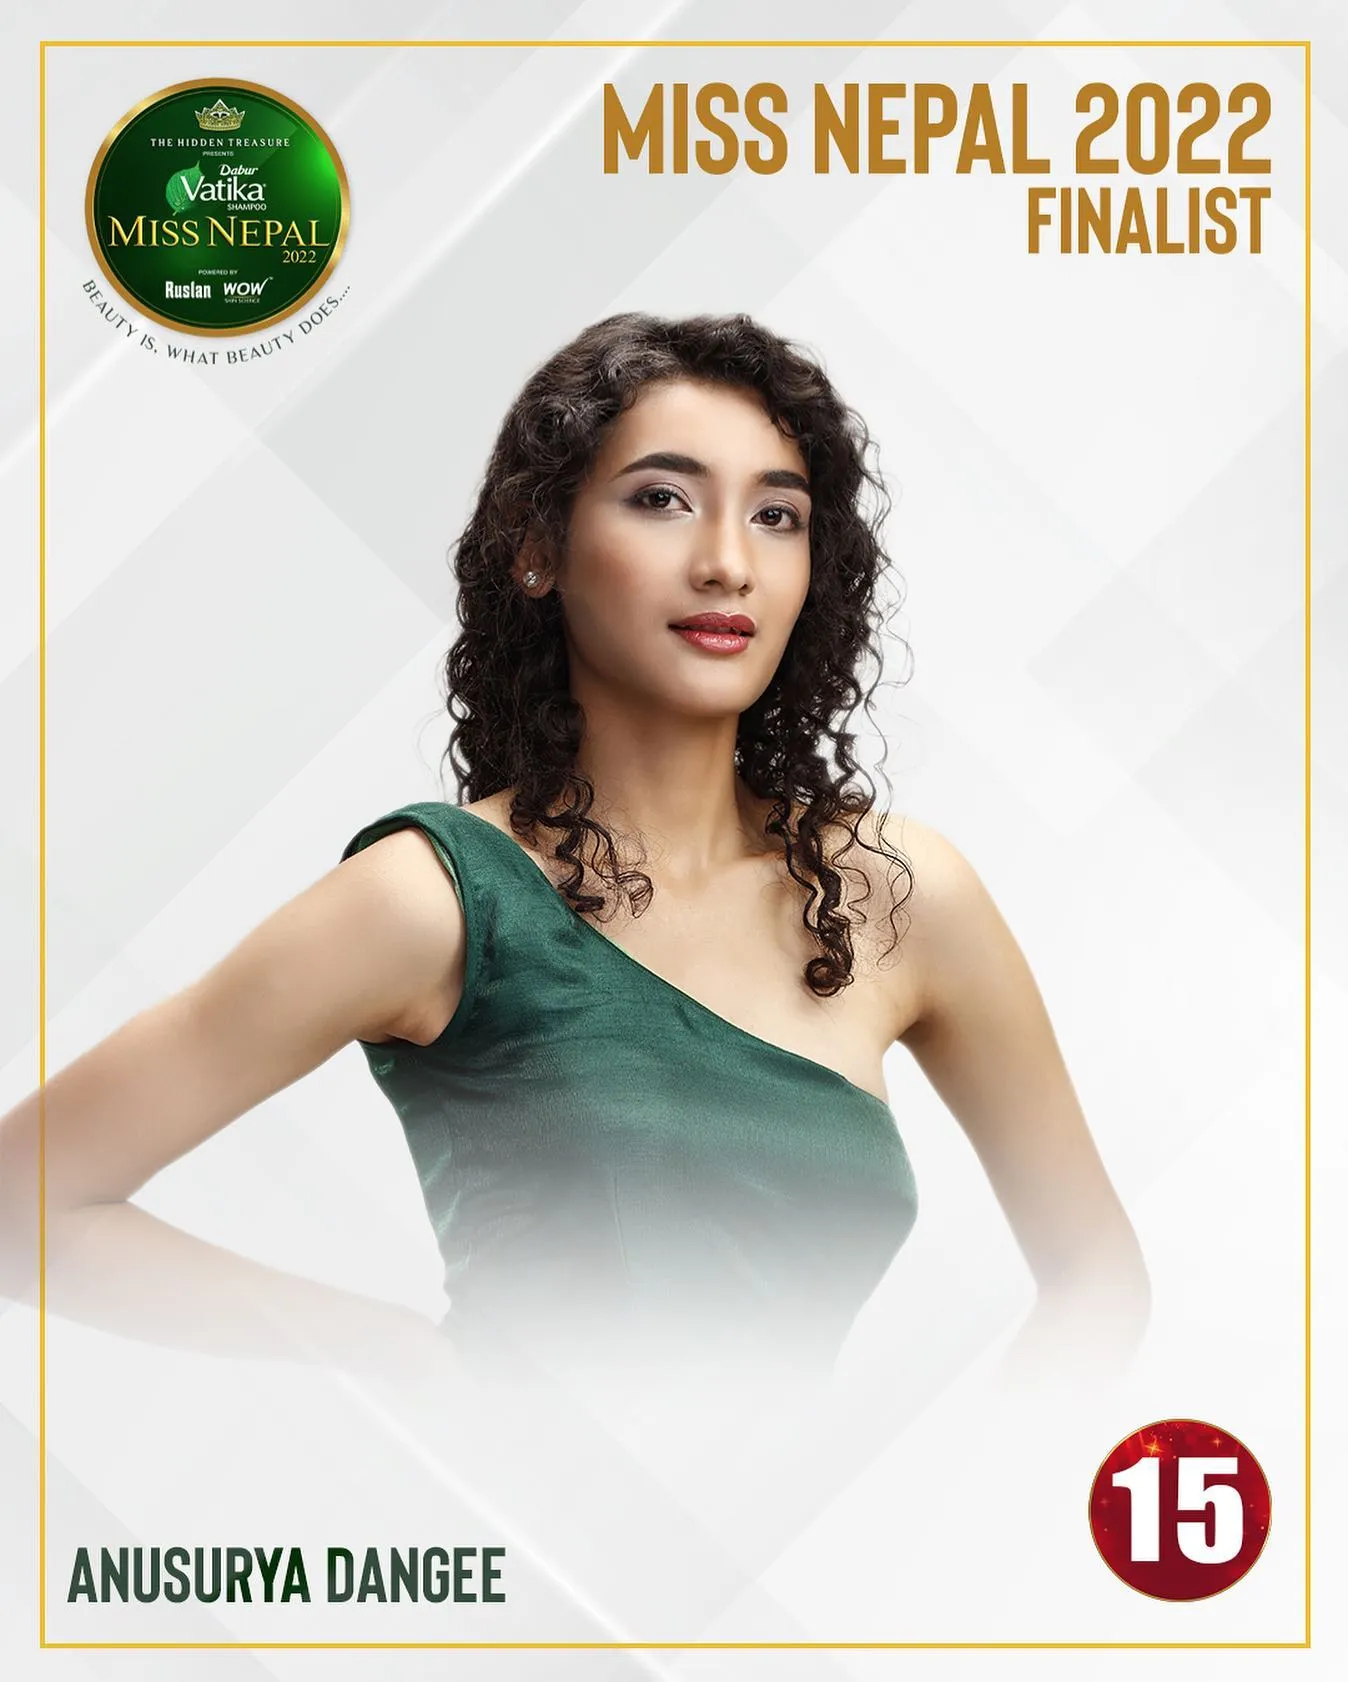 candidatas a miss nepal 2022. final: ? - Página 2 Xg3aQn